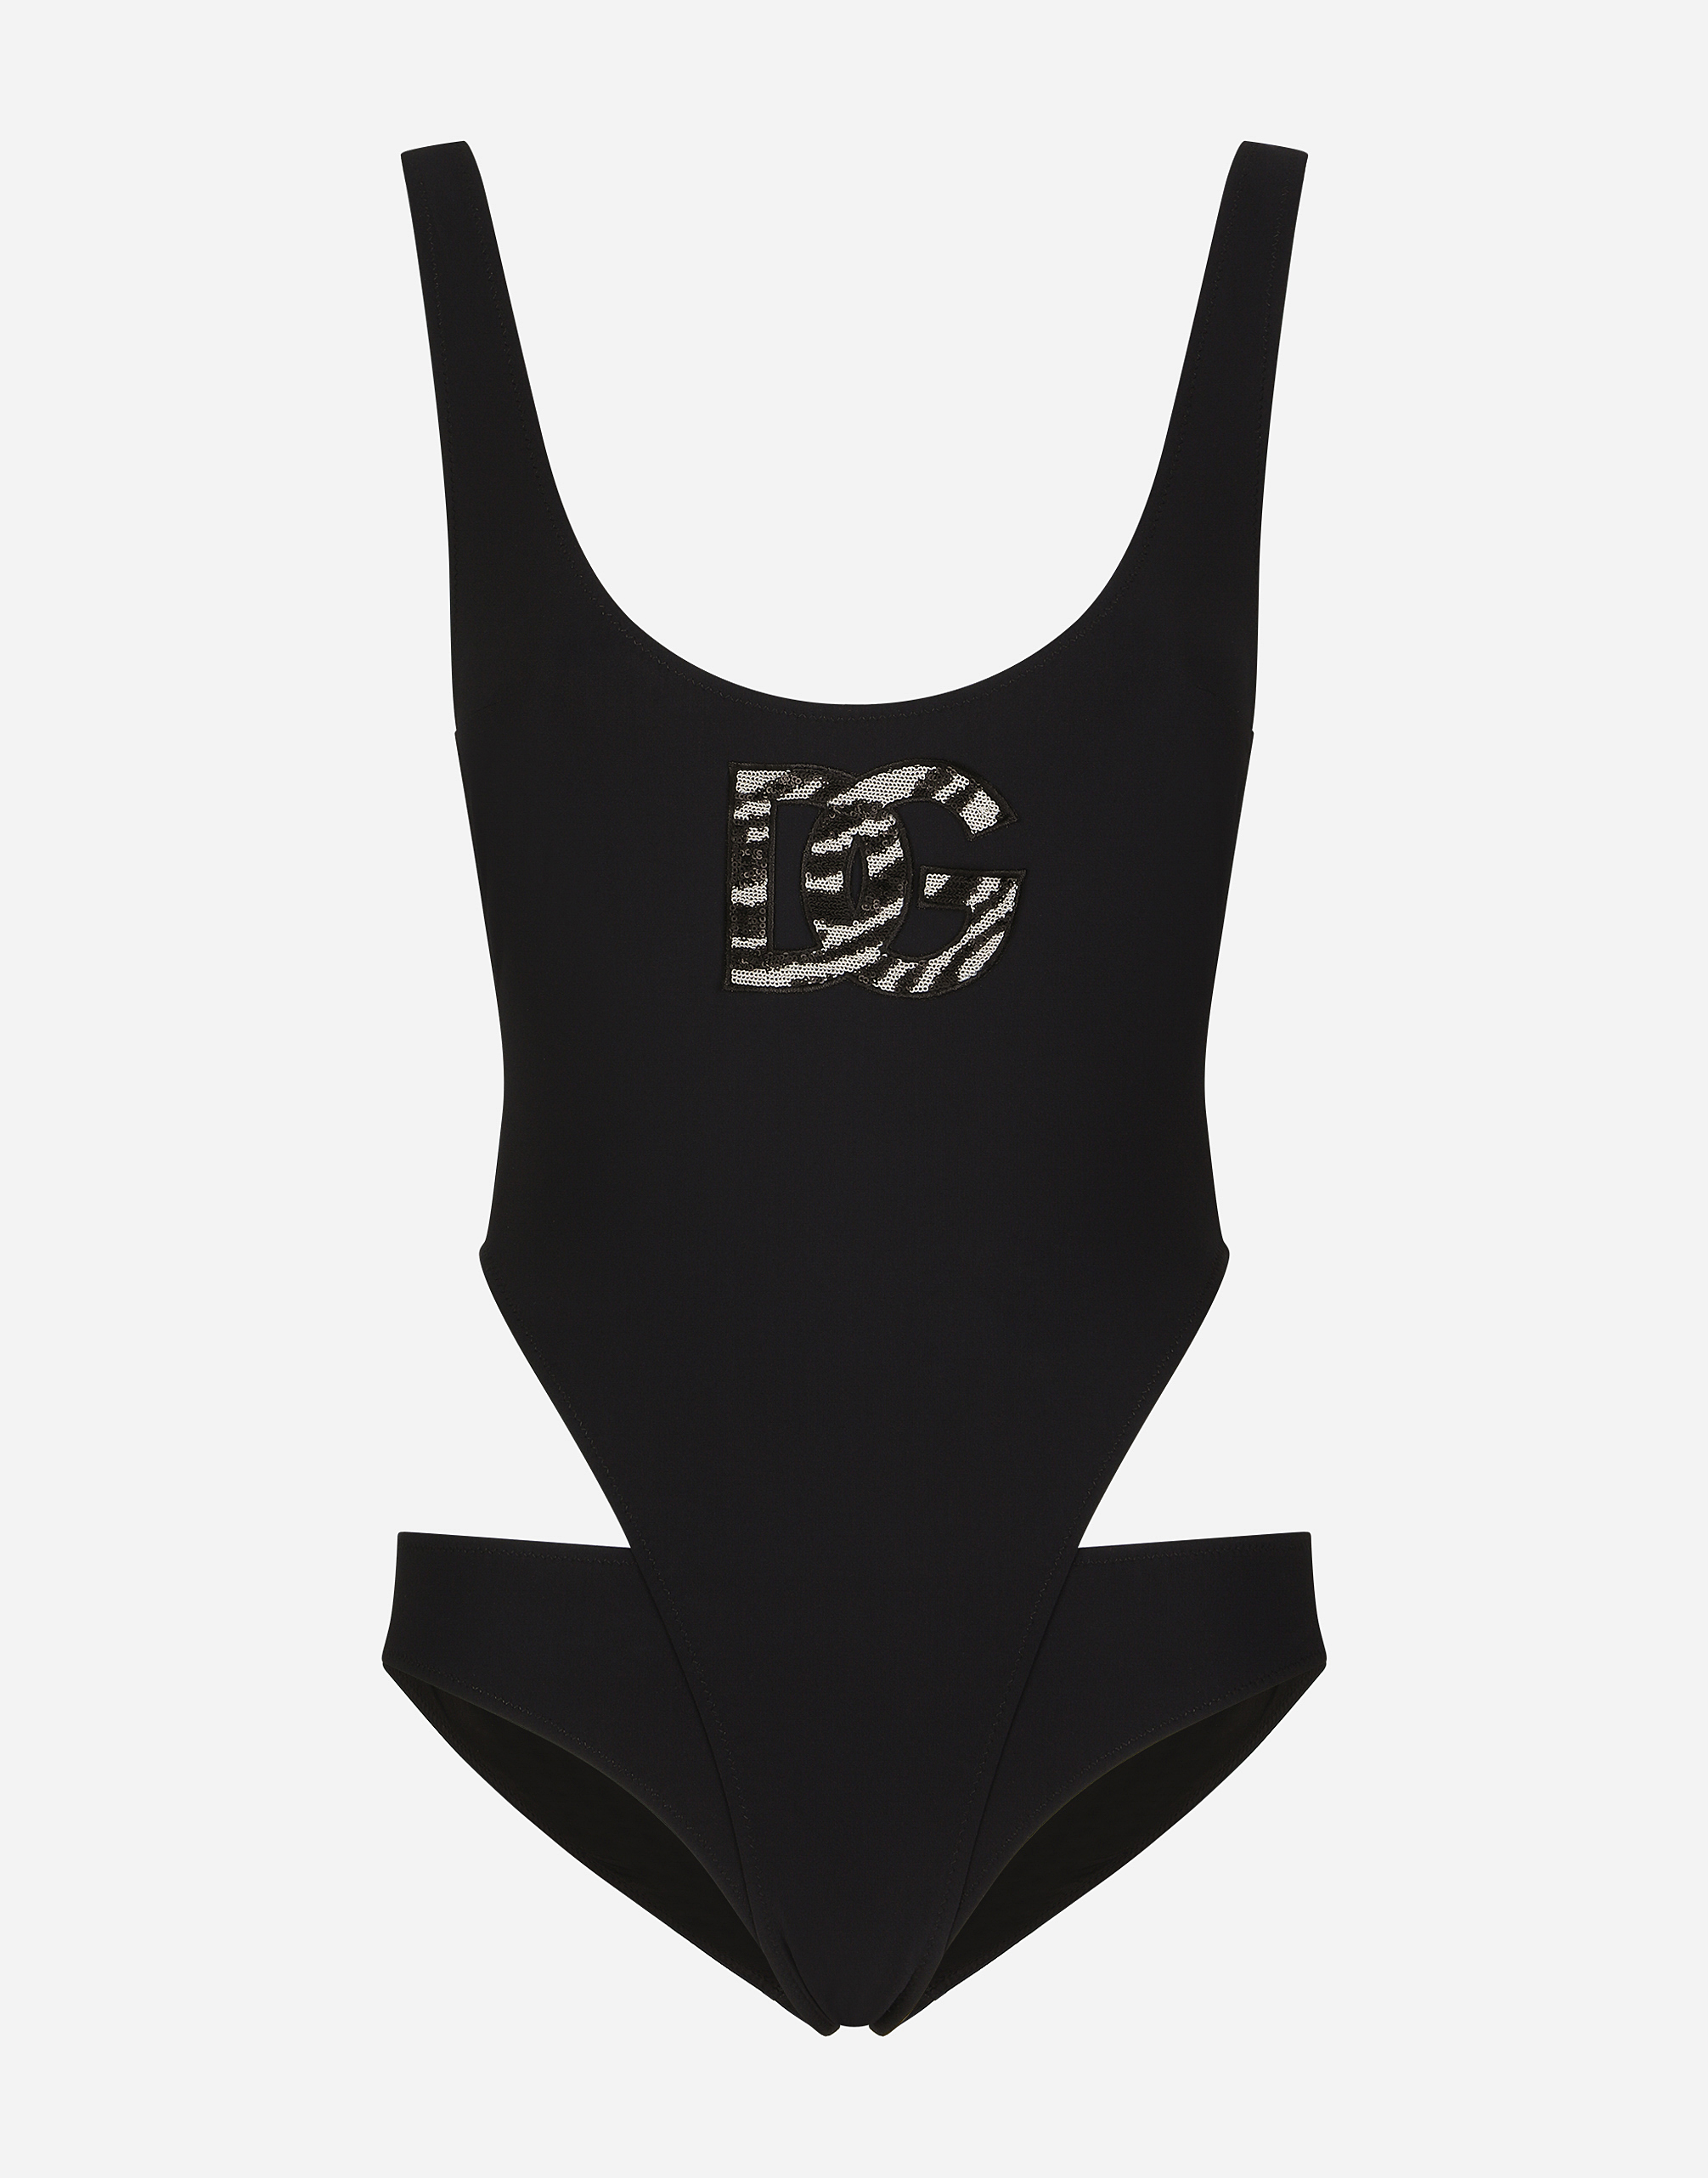 Racing swimsuit with bikini bottoms and DG logo in Black